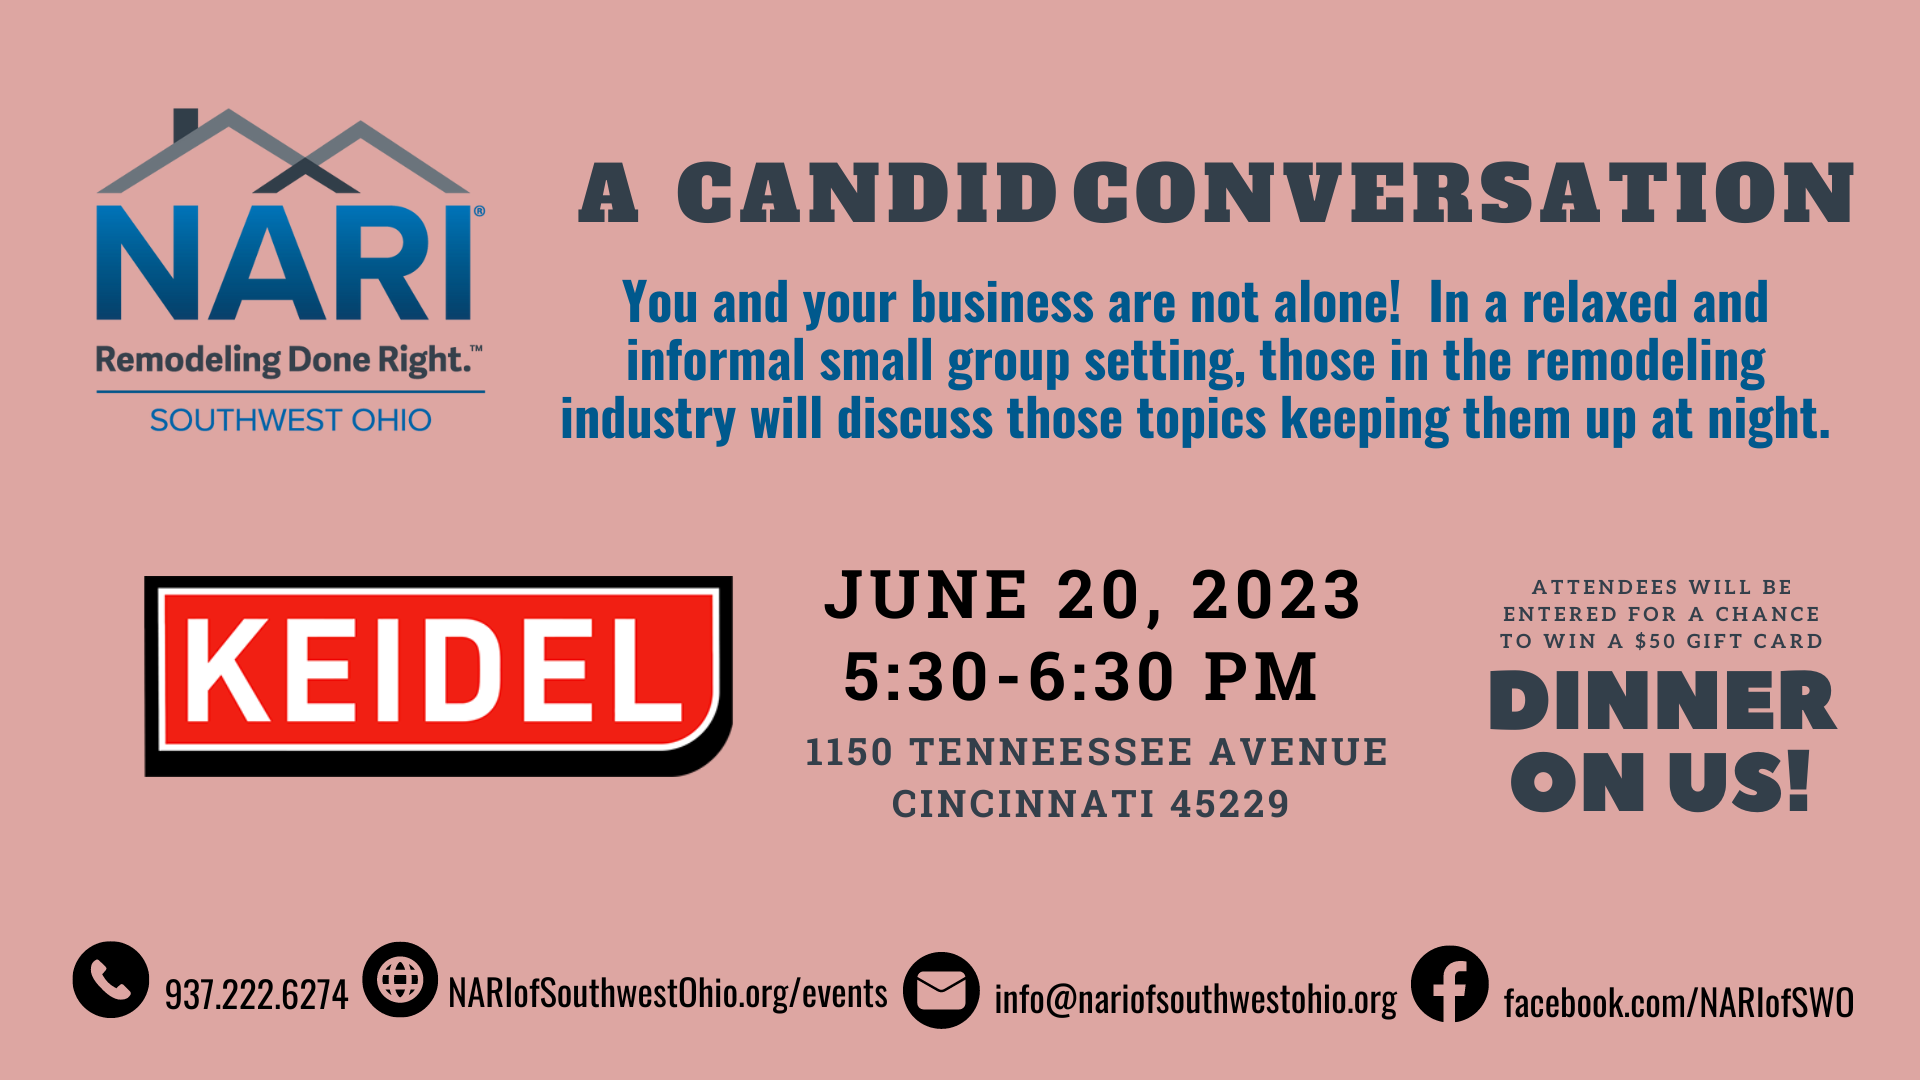 June 20 - Candid Conversation